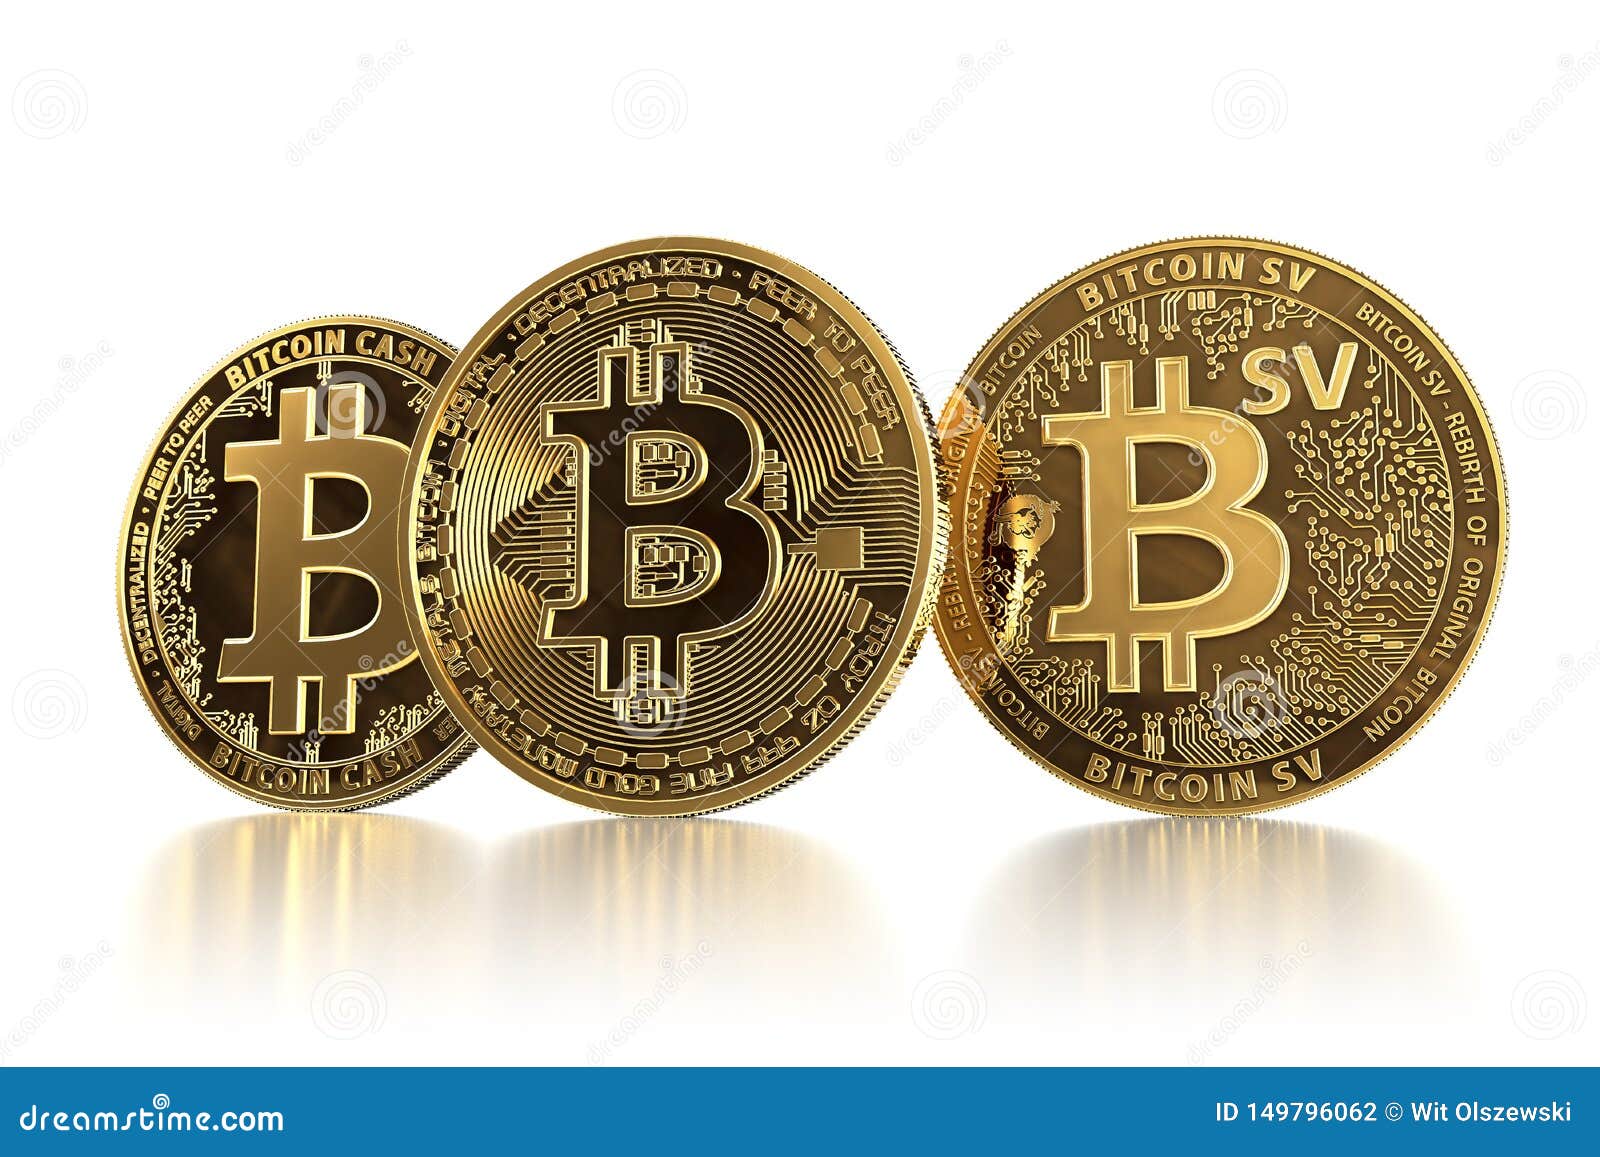 Bitcoin cash to satoshi ethereum algorithm coins